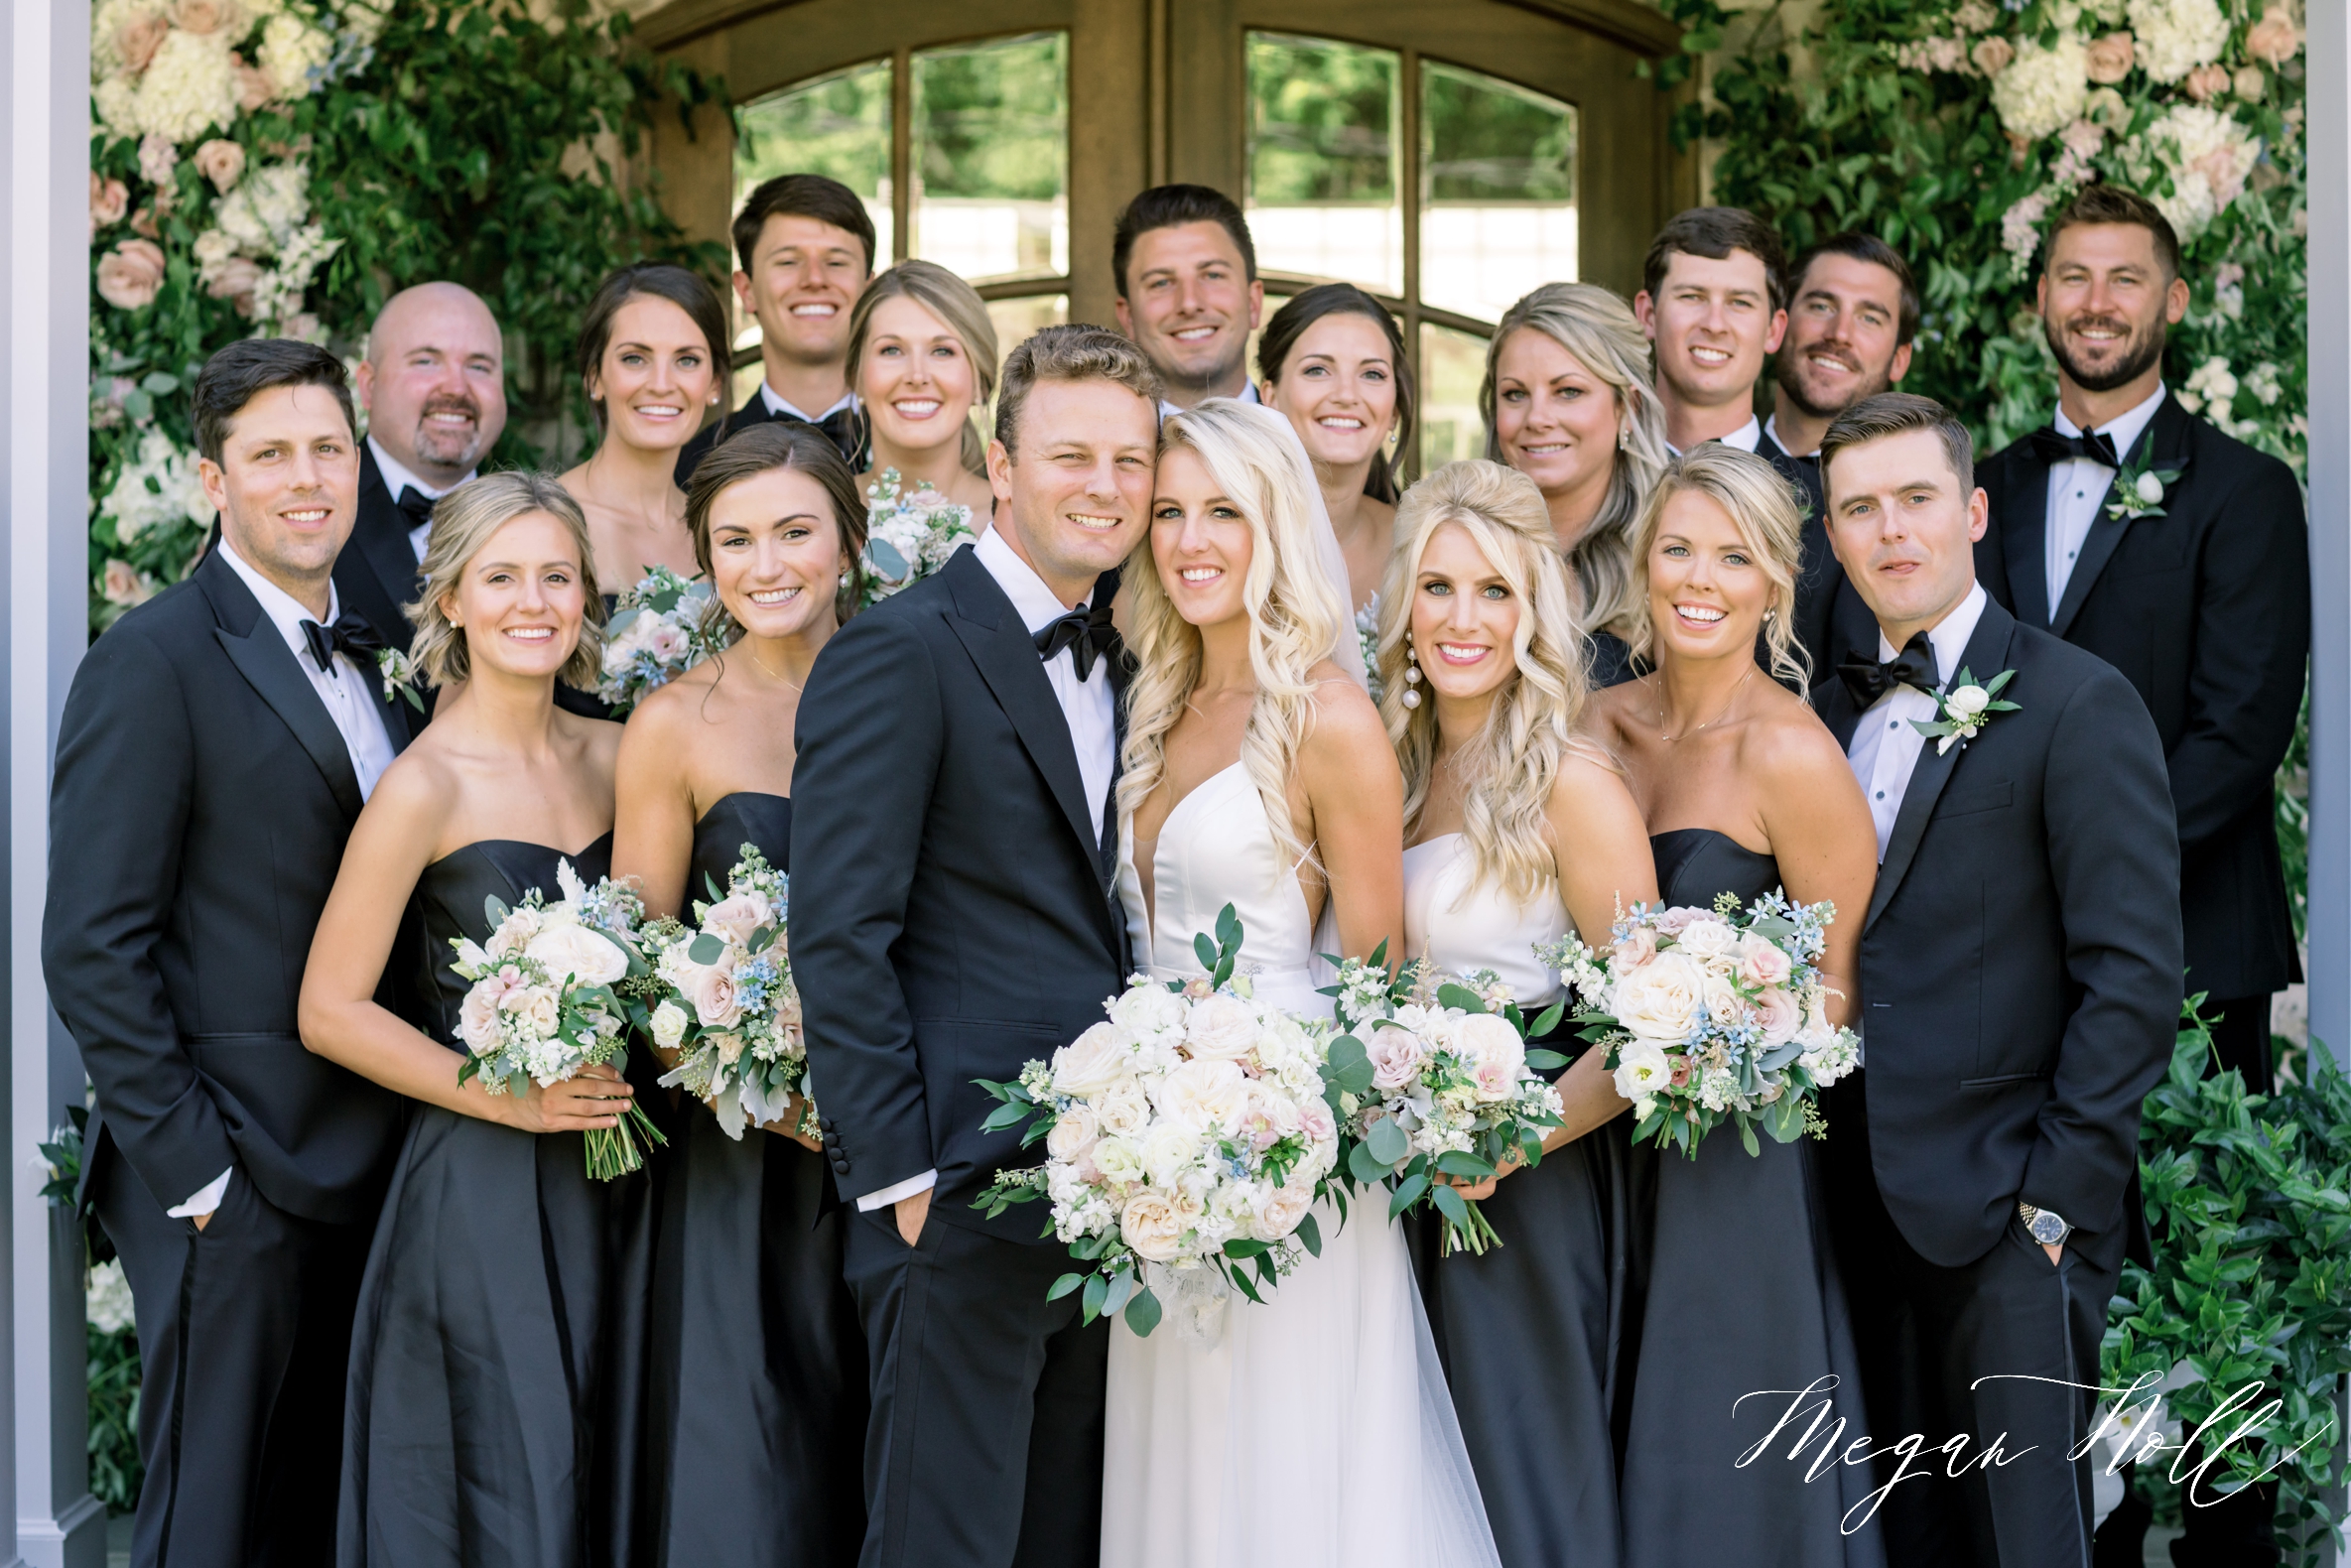 Bridal Party wearing all black taken by Cincinnati Wedding Photographer Megan Noll